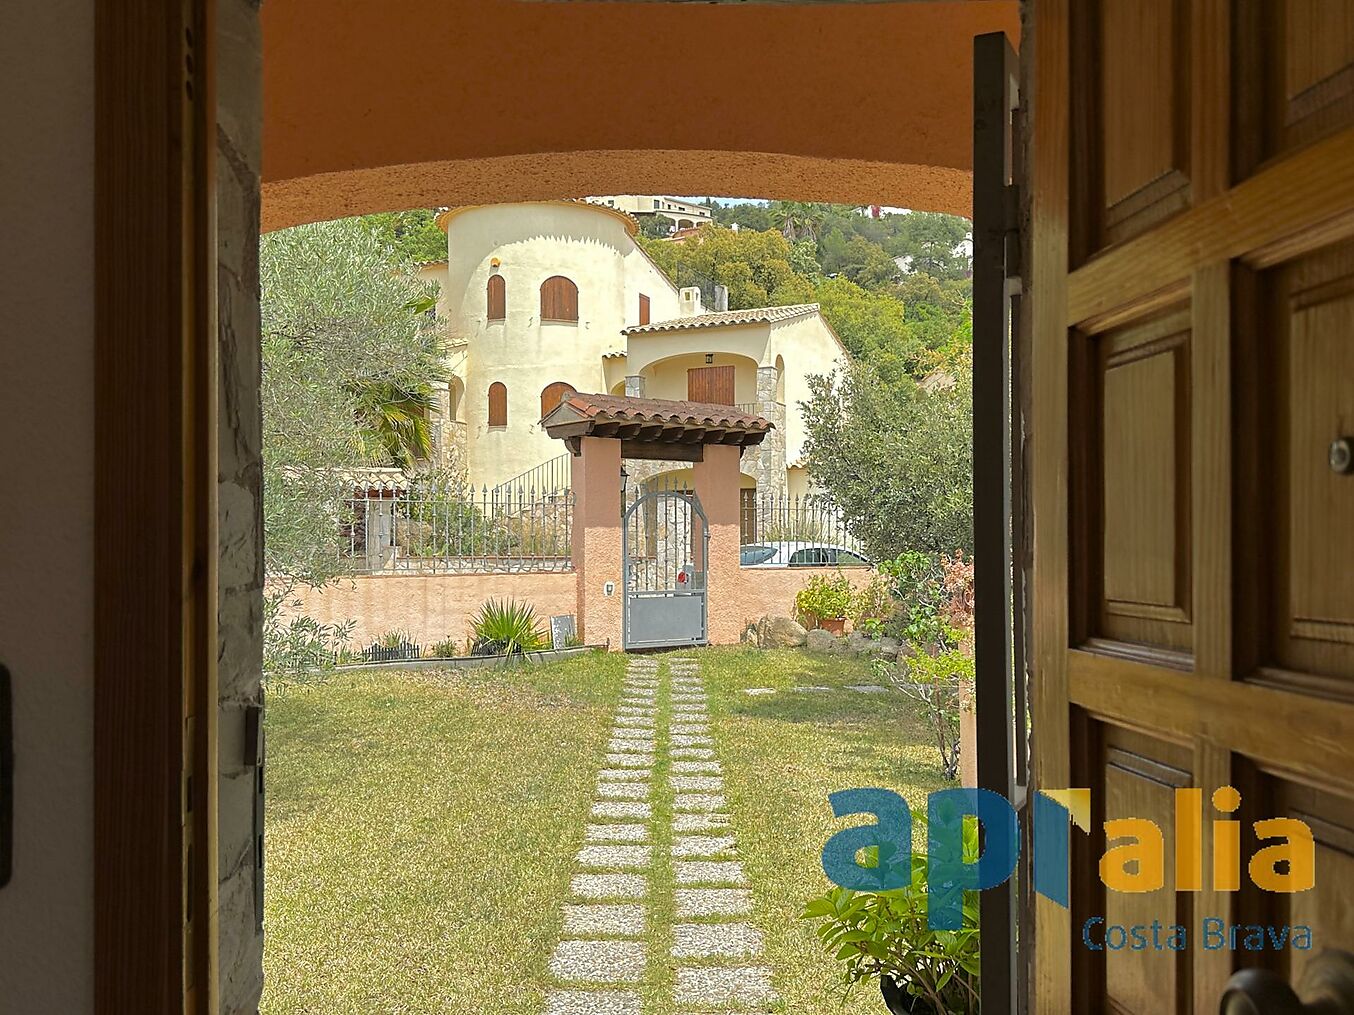 Spacious villa in Calonge